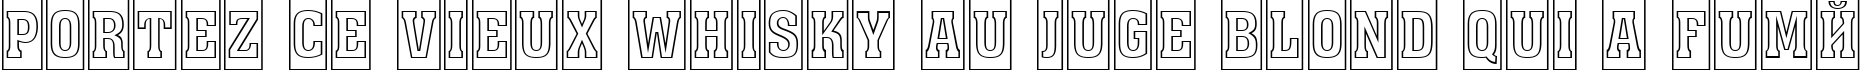 Пример написания шрифтом a_AssuanTitulCmOtl текста на французском